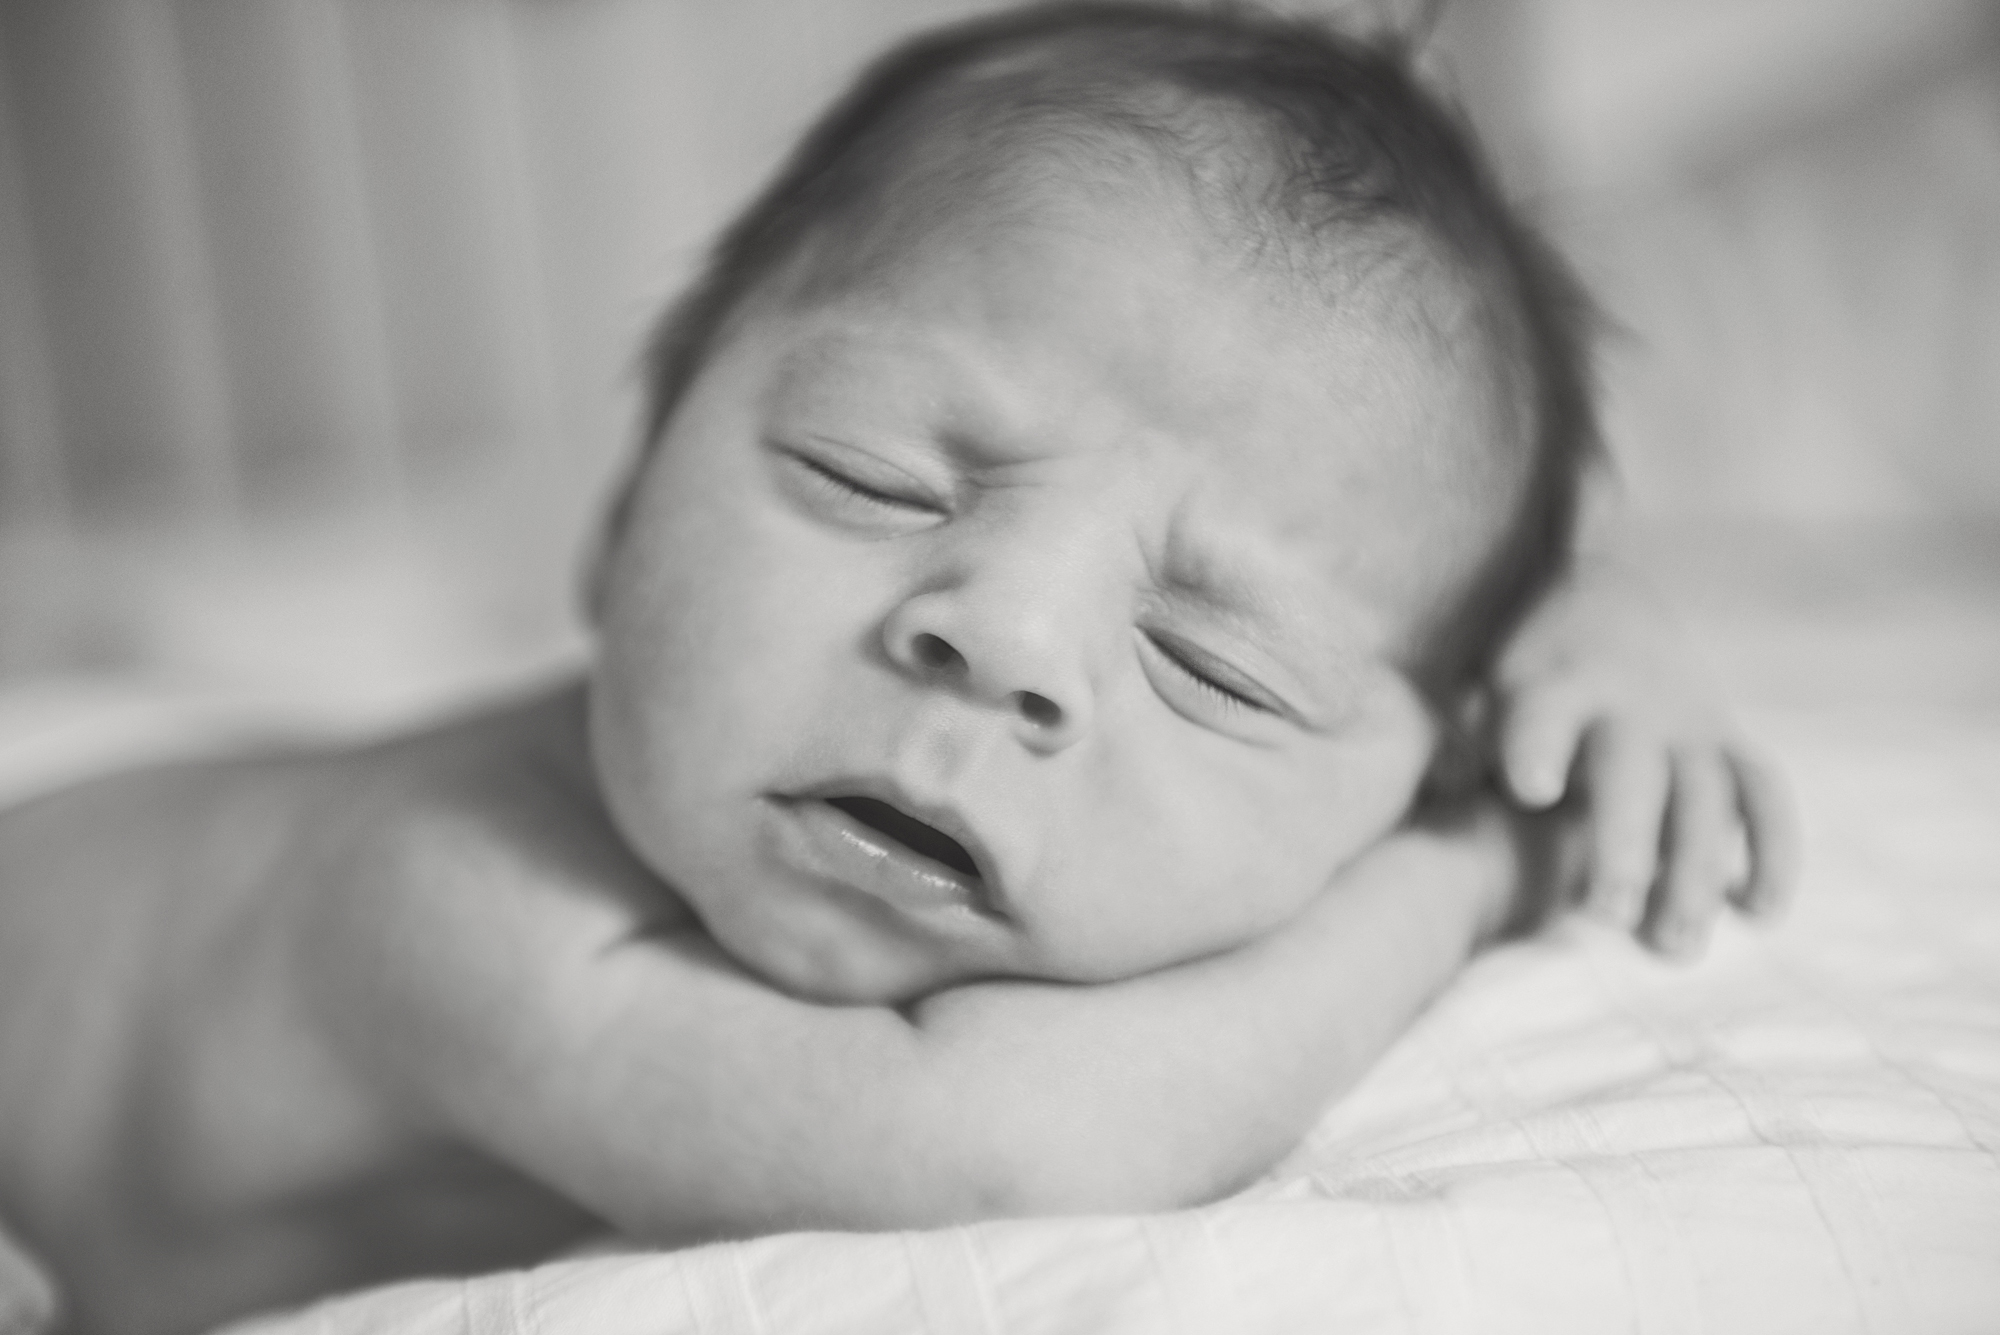 newborn baby boy photo 03.jpg